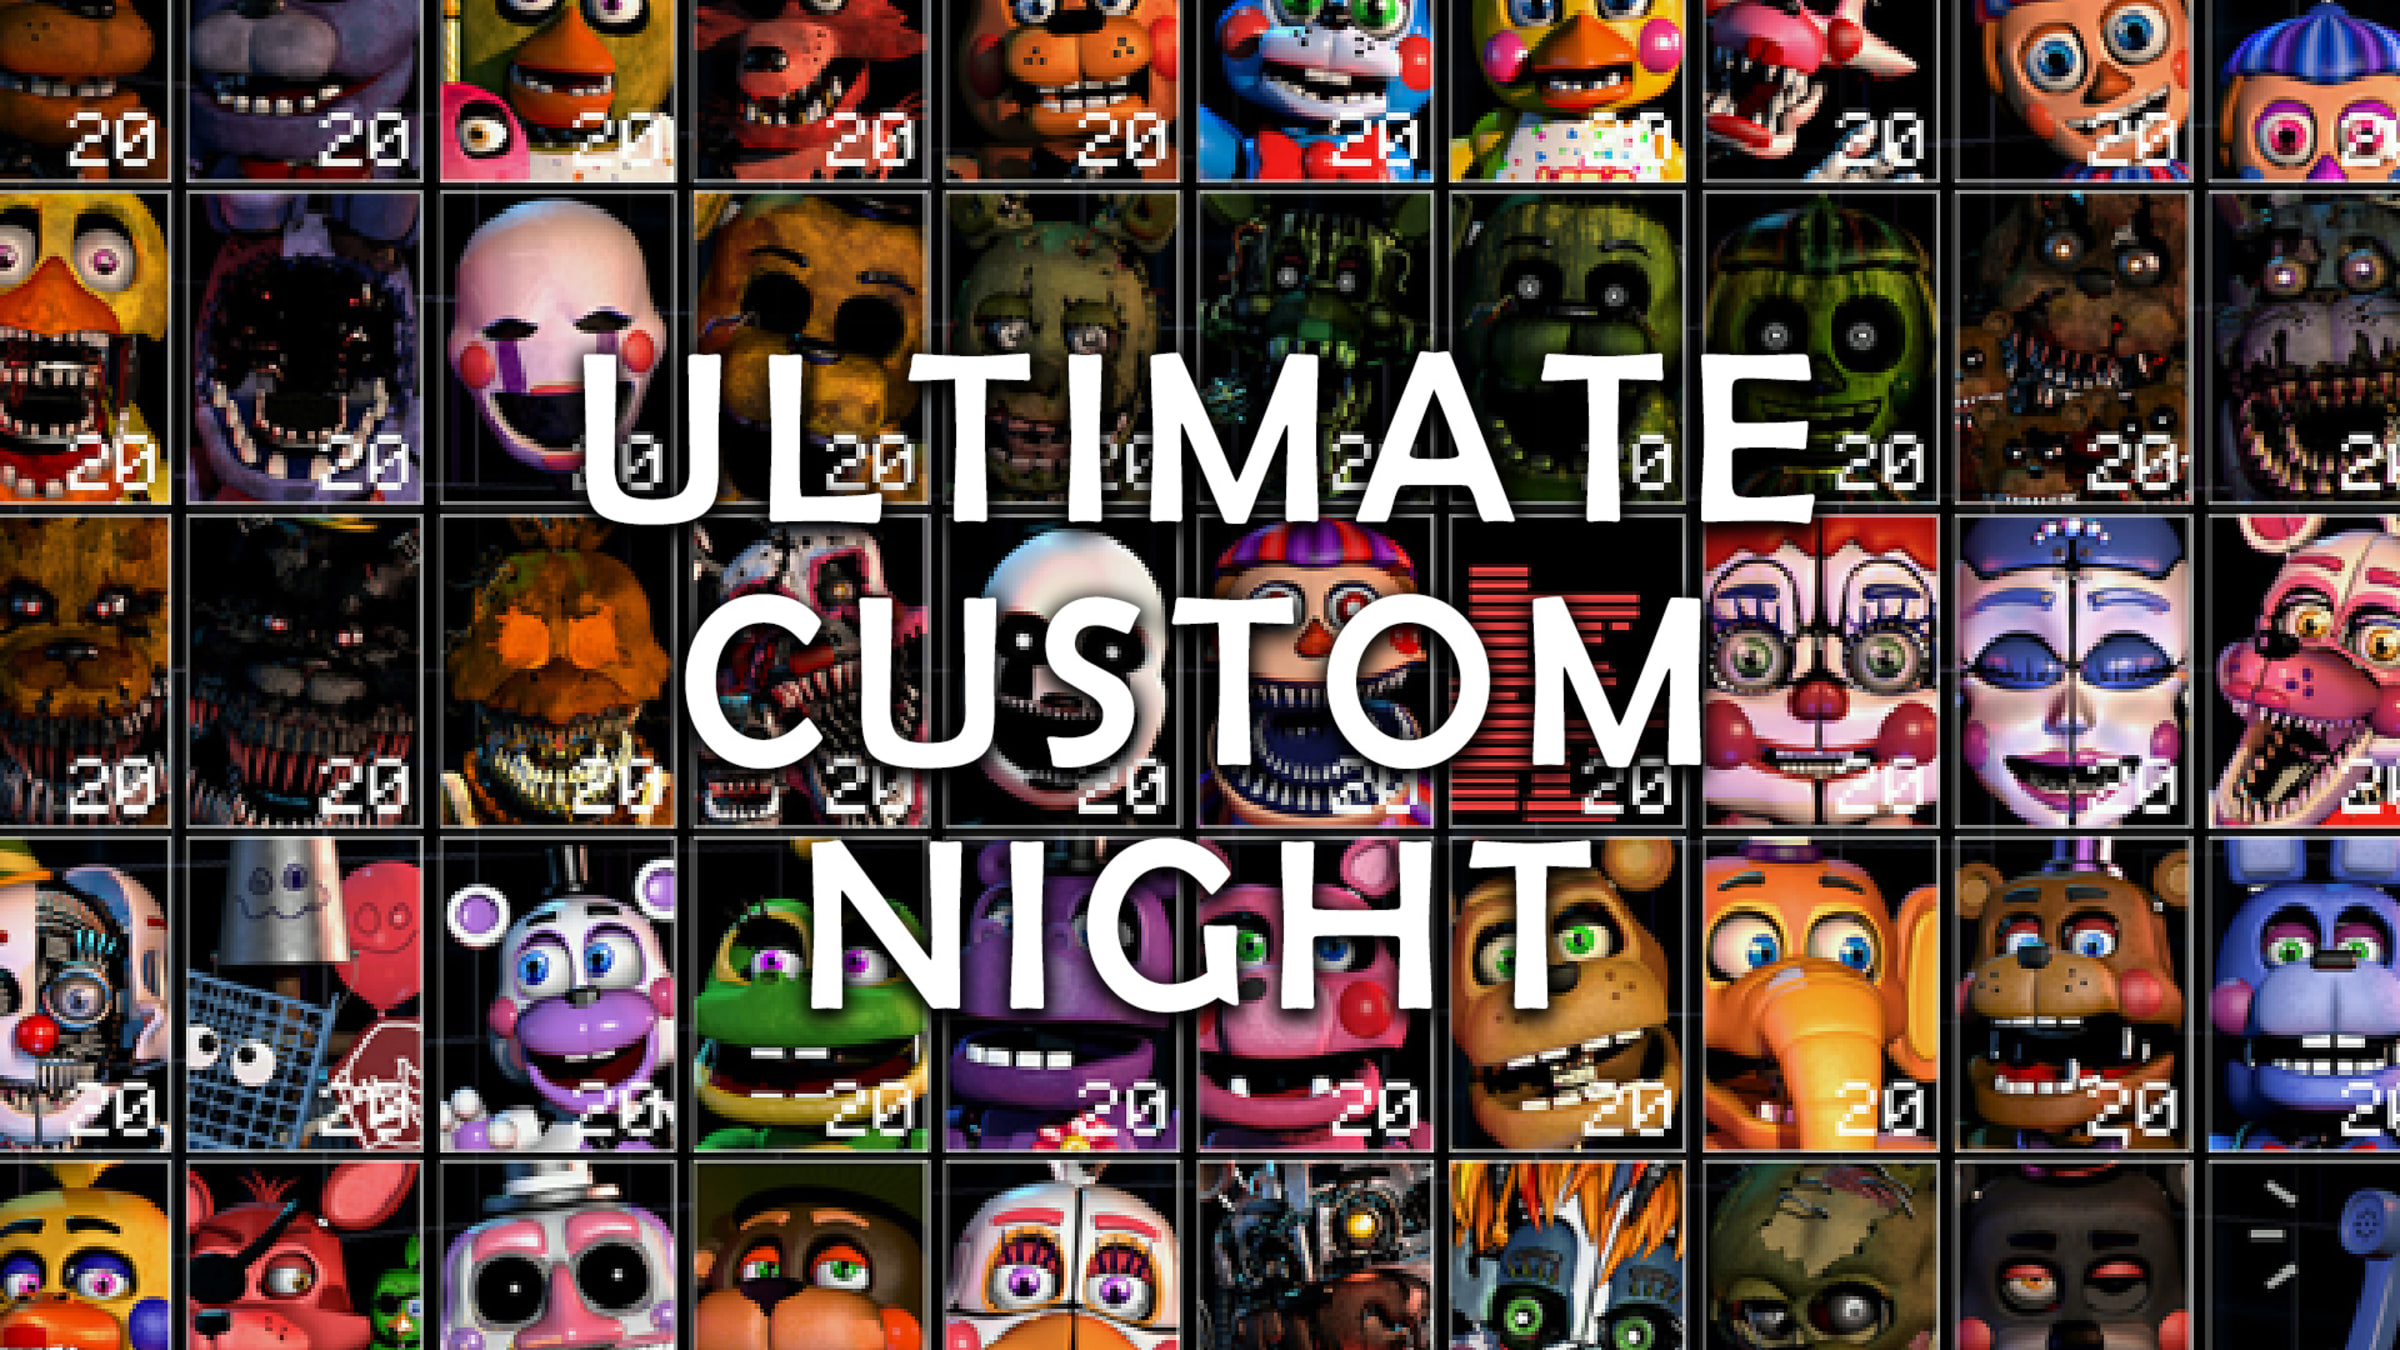 Five night at freddy ultimate custom night